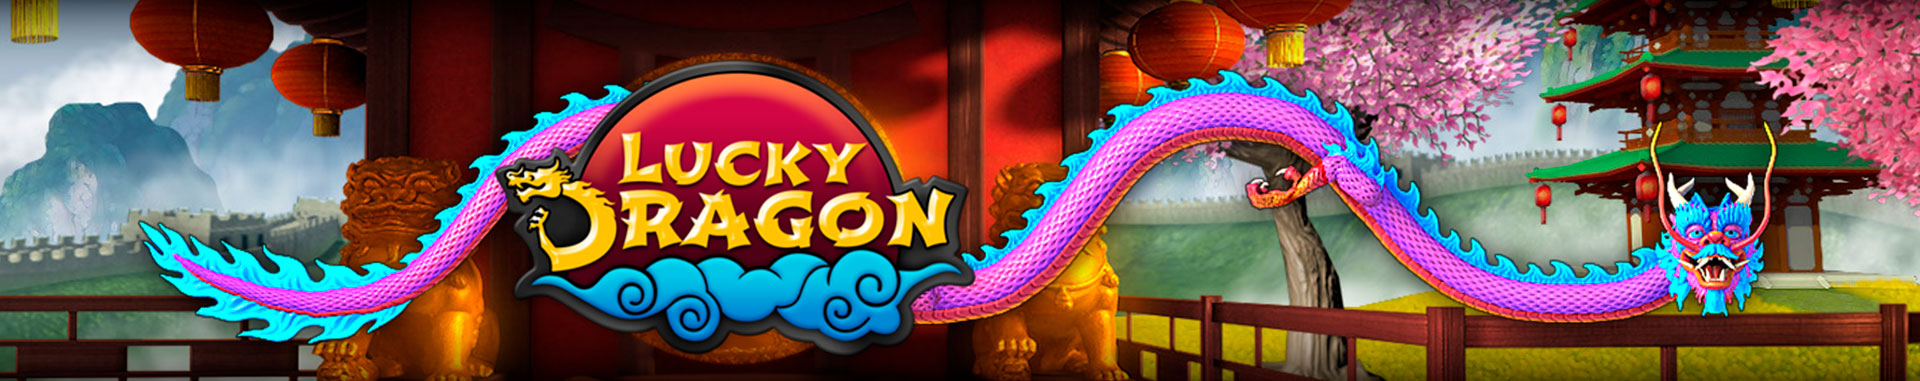 Tragaperras Online Lucky Dragon